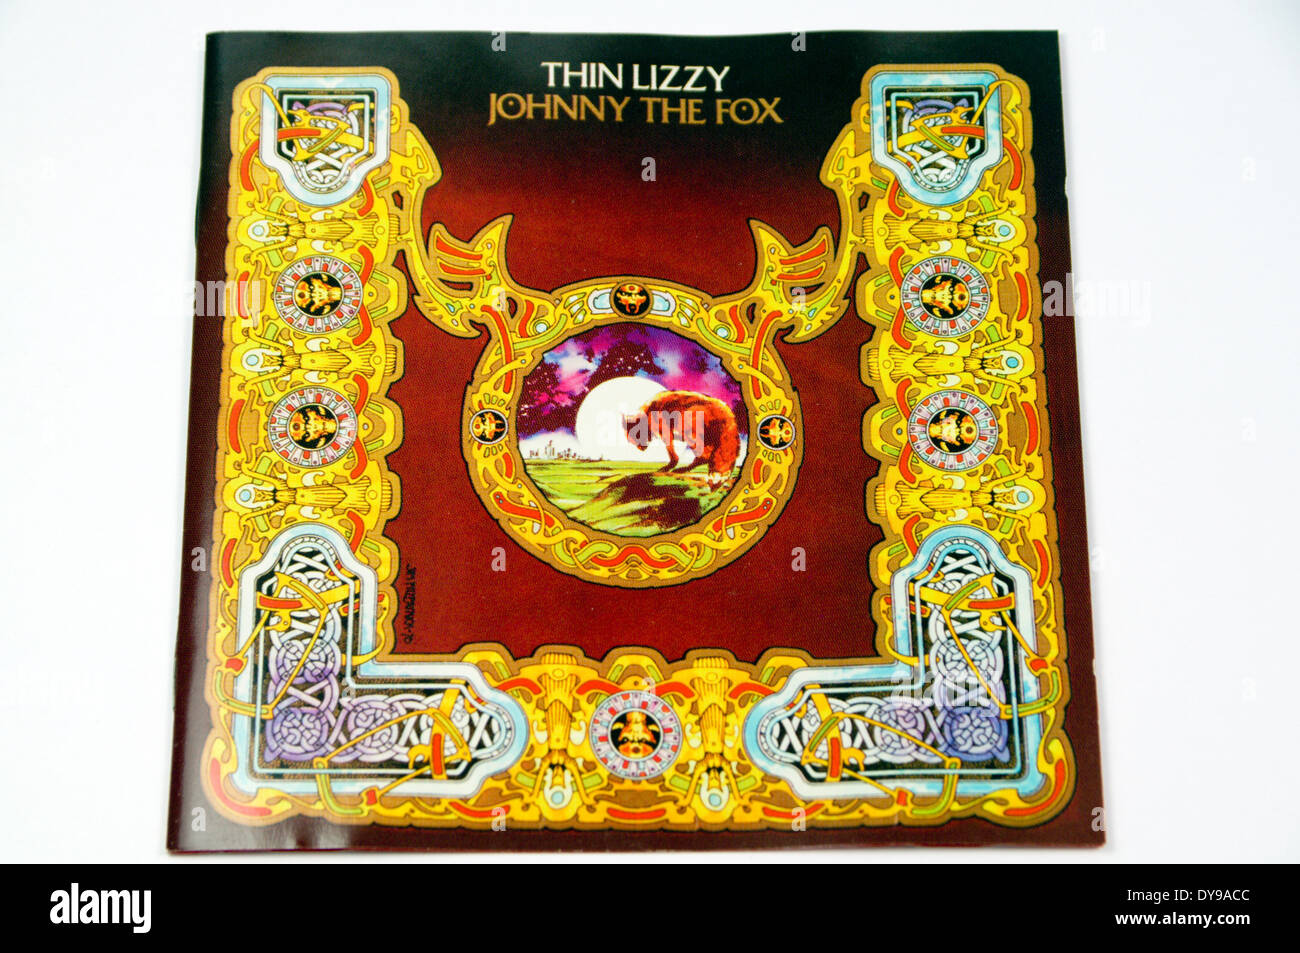 Thin Lizzy "Johnny the Fox" Album Stockfoto